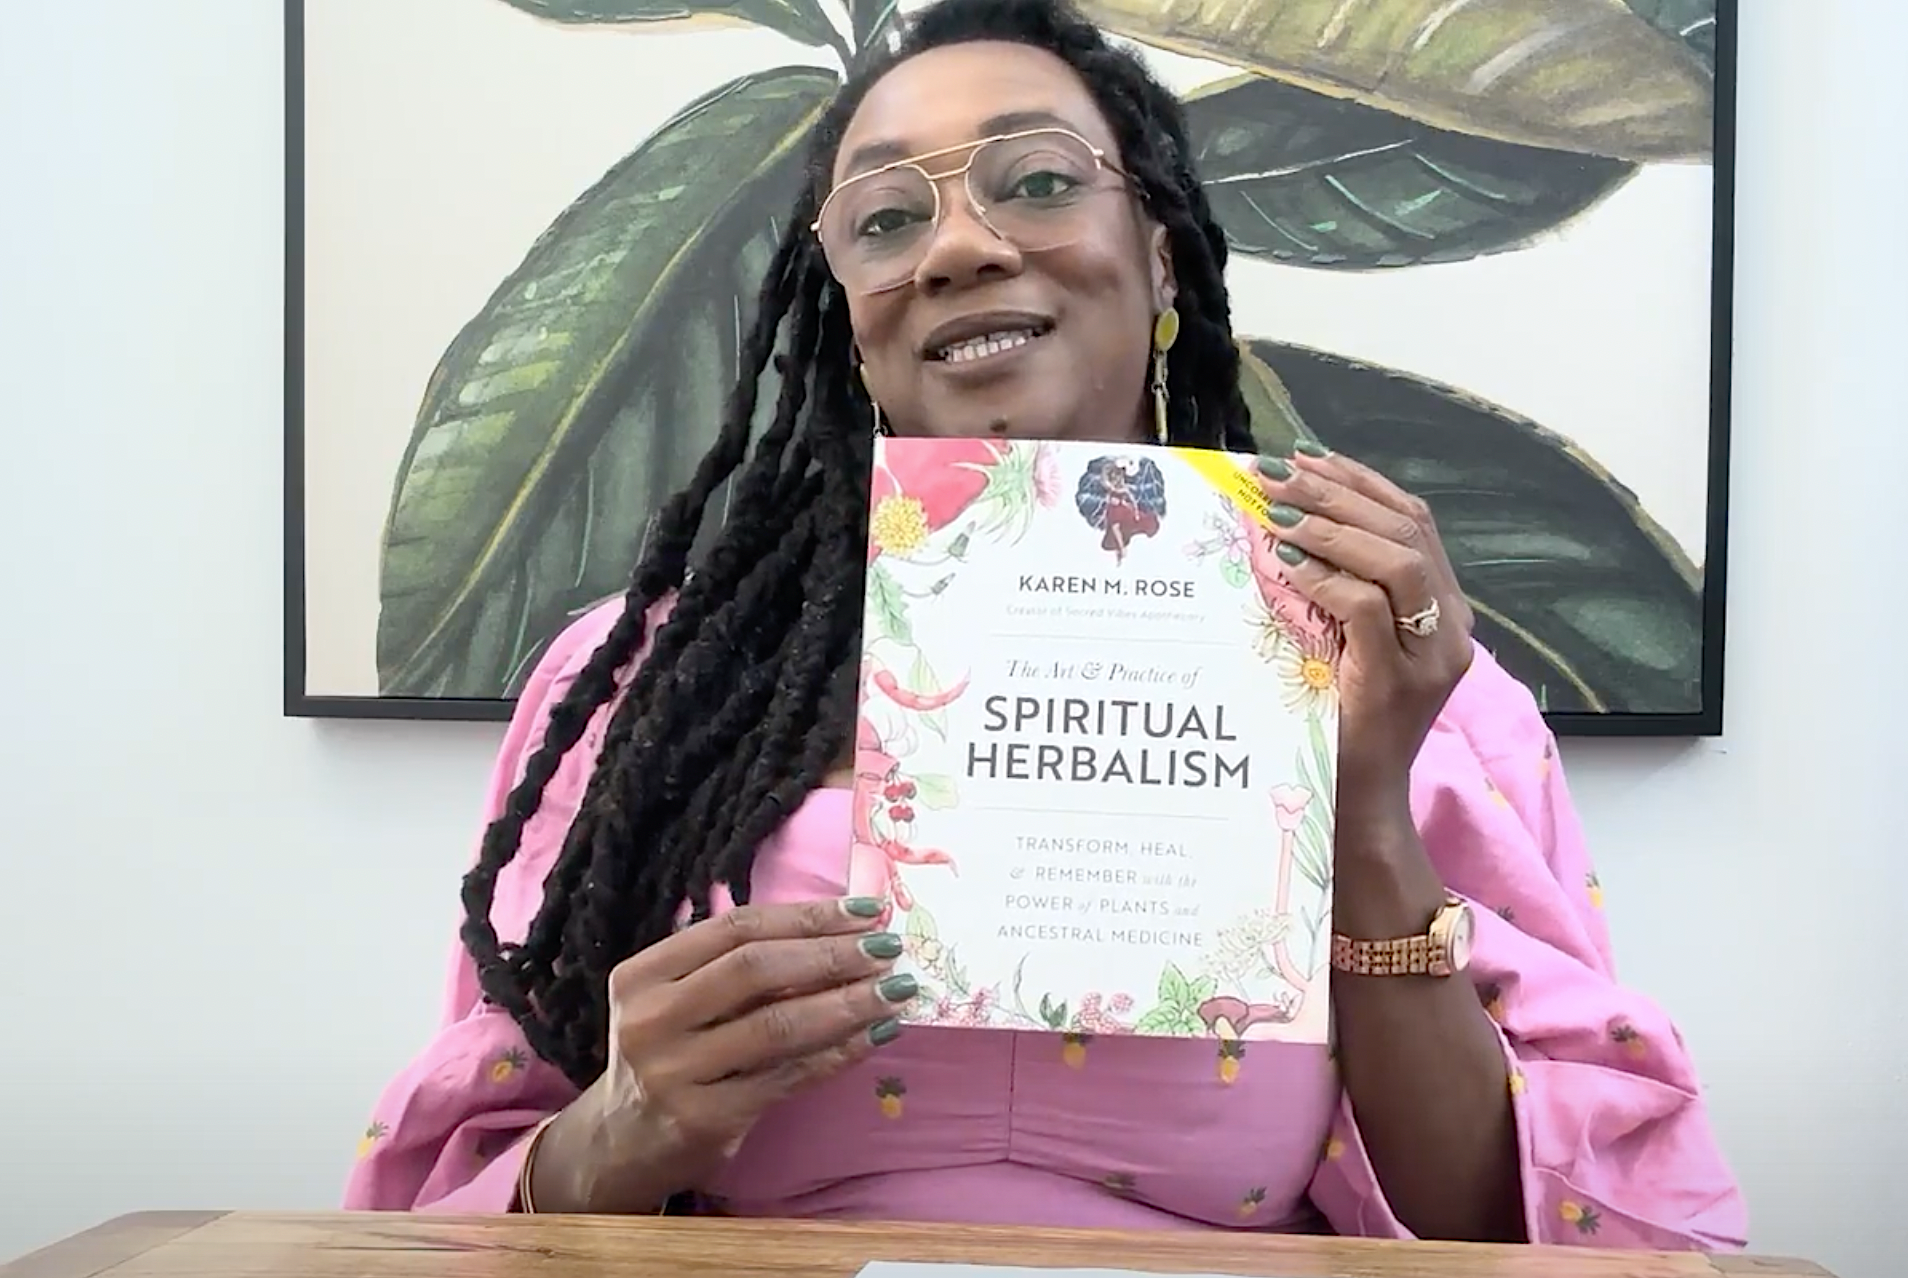 Karen Rose holding her book, The Art & Practice of Spiritual Herbalism